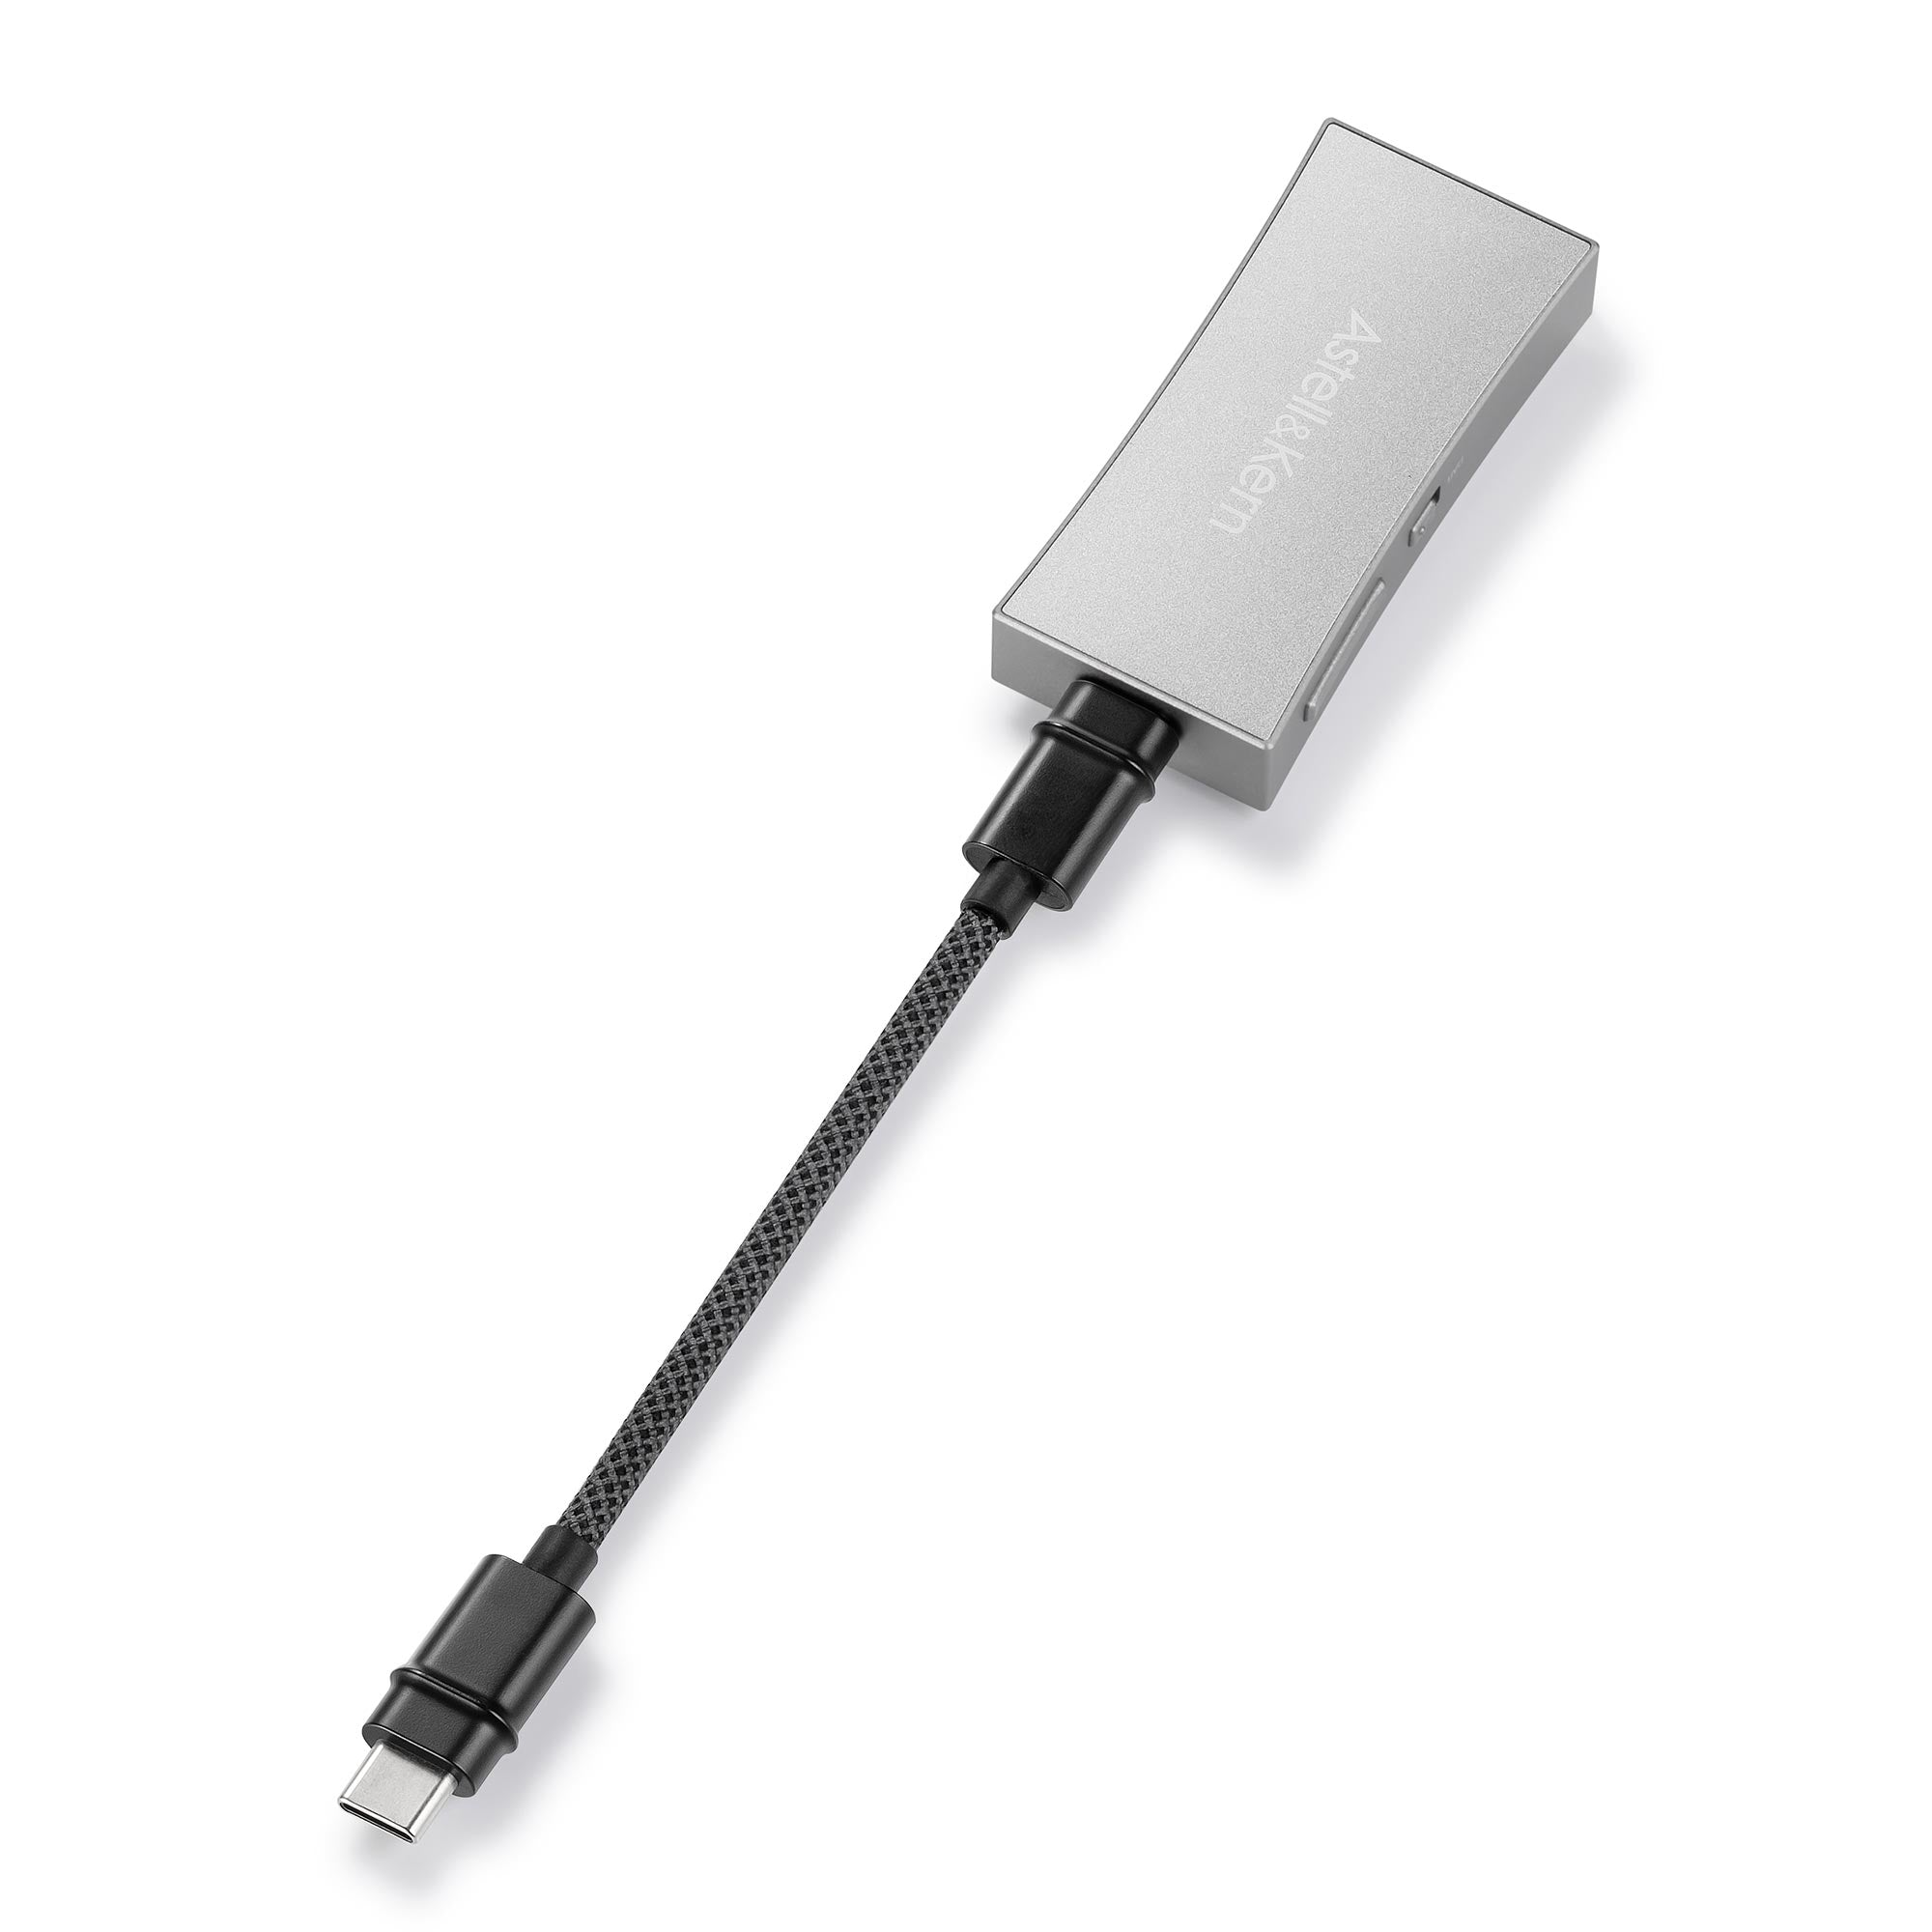 Astell u0026 Kern AK HC4 Portable Hi-Fi USB DAC Cable